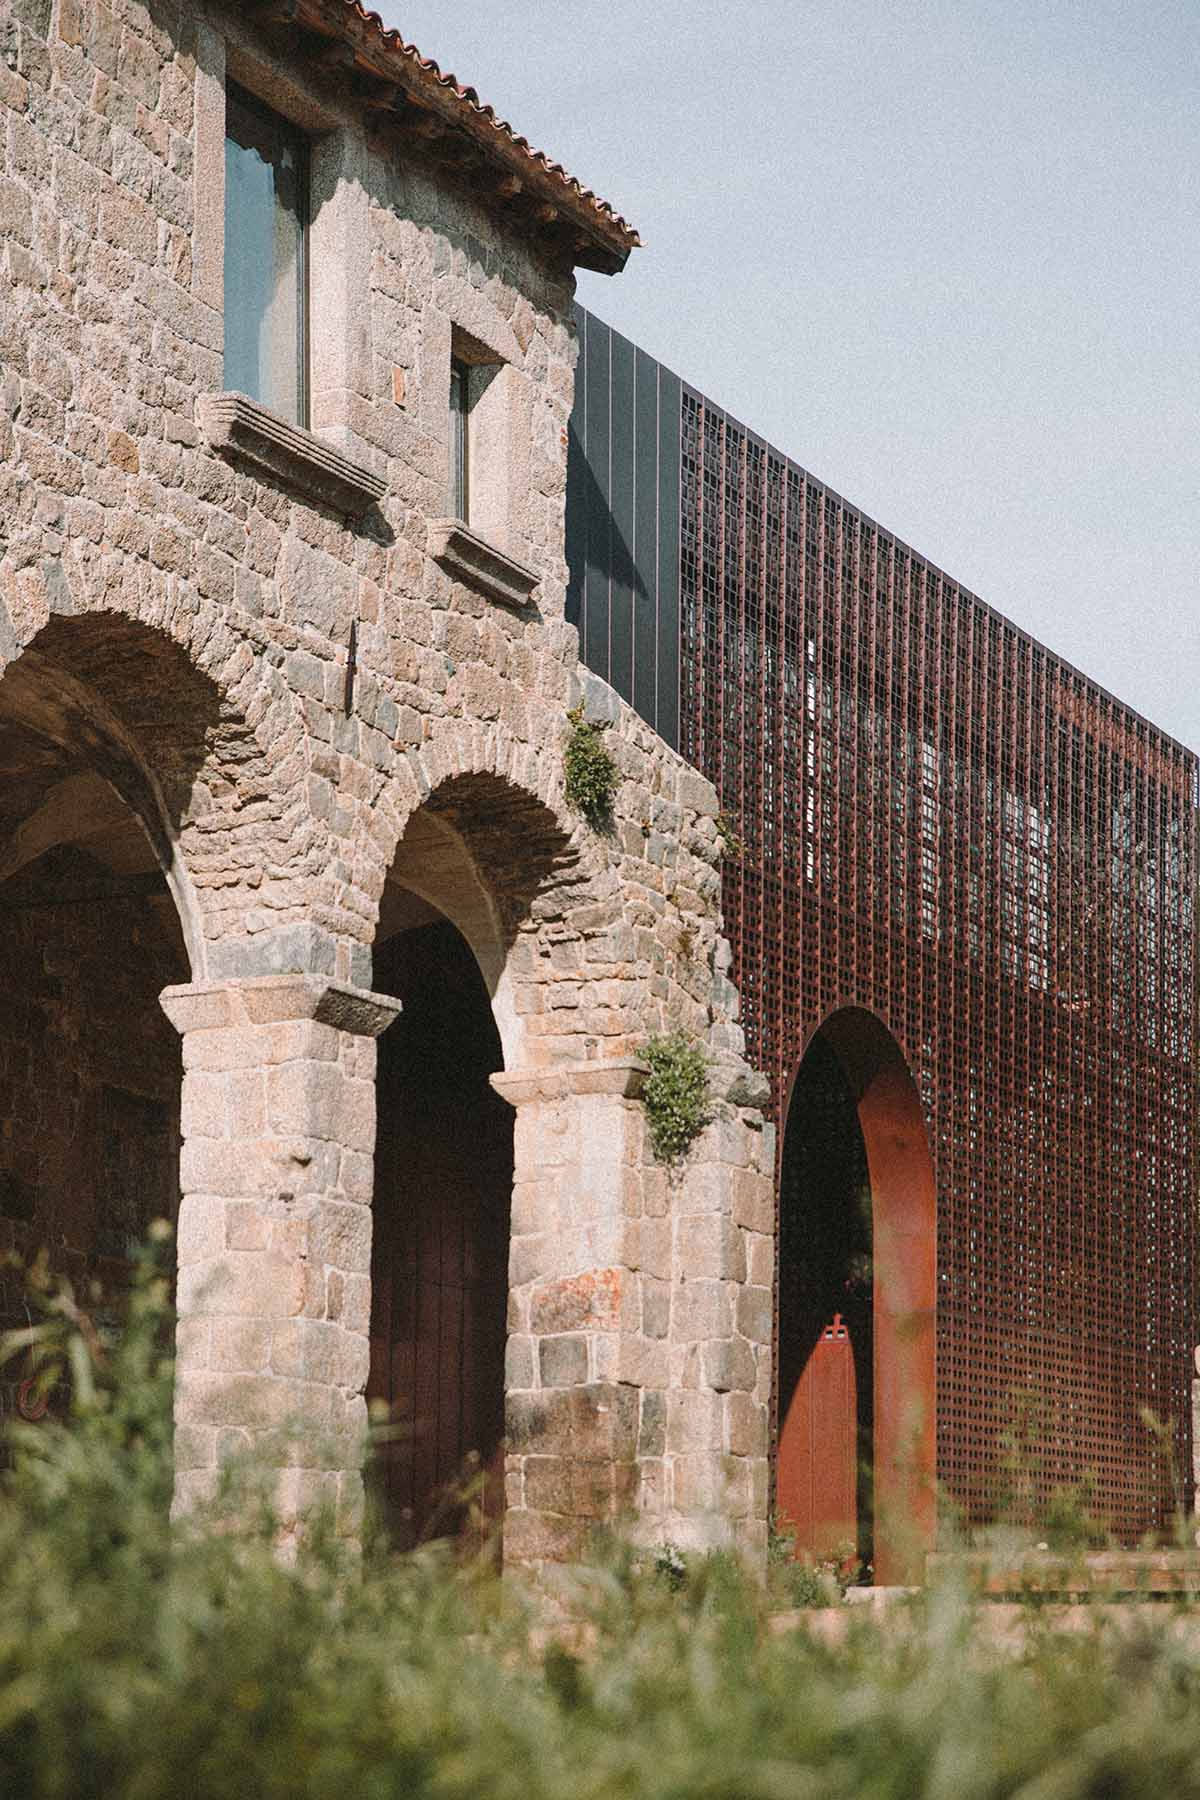 Convent Saint-François Sainte-Lucie di Tallano, Amelia Tavella Architects | ©Thibaut Dini, courtesy of Amelia Tavella Architects